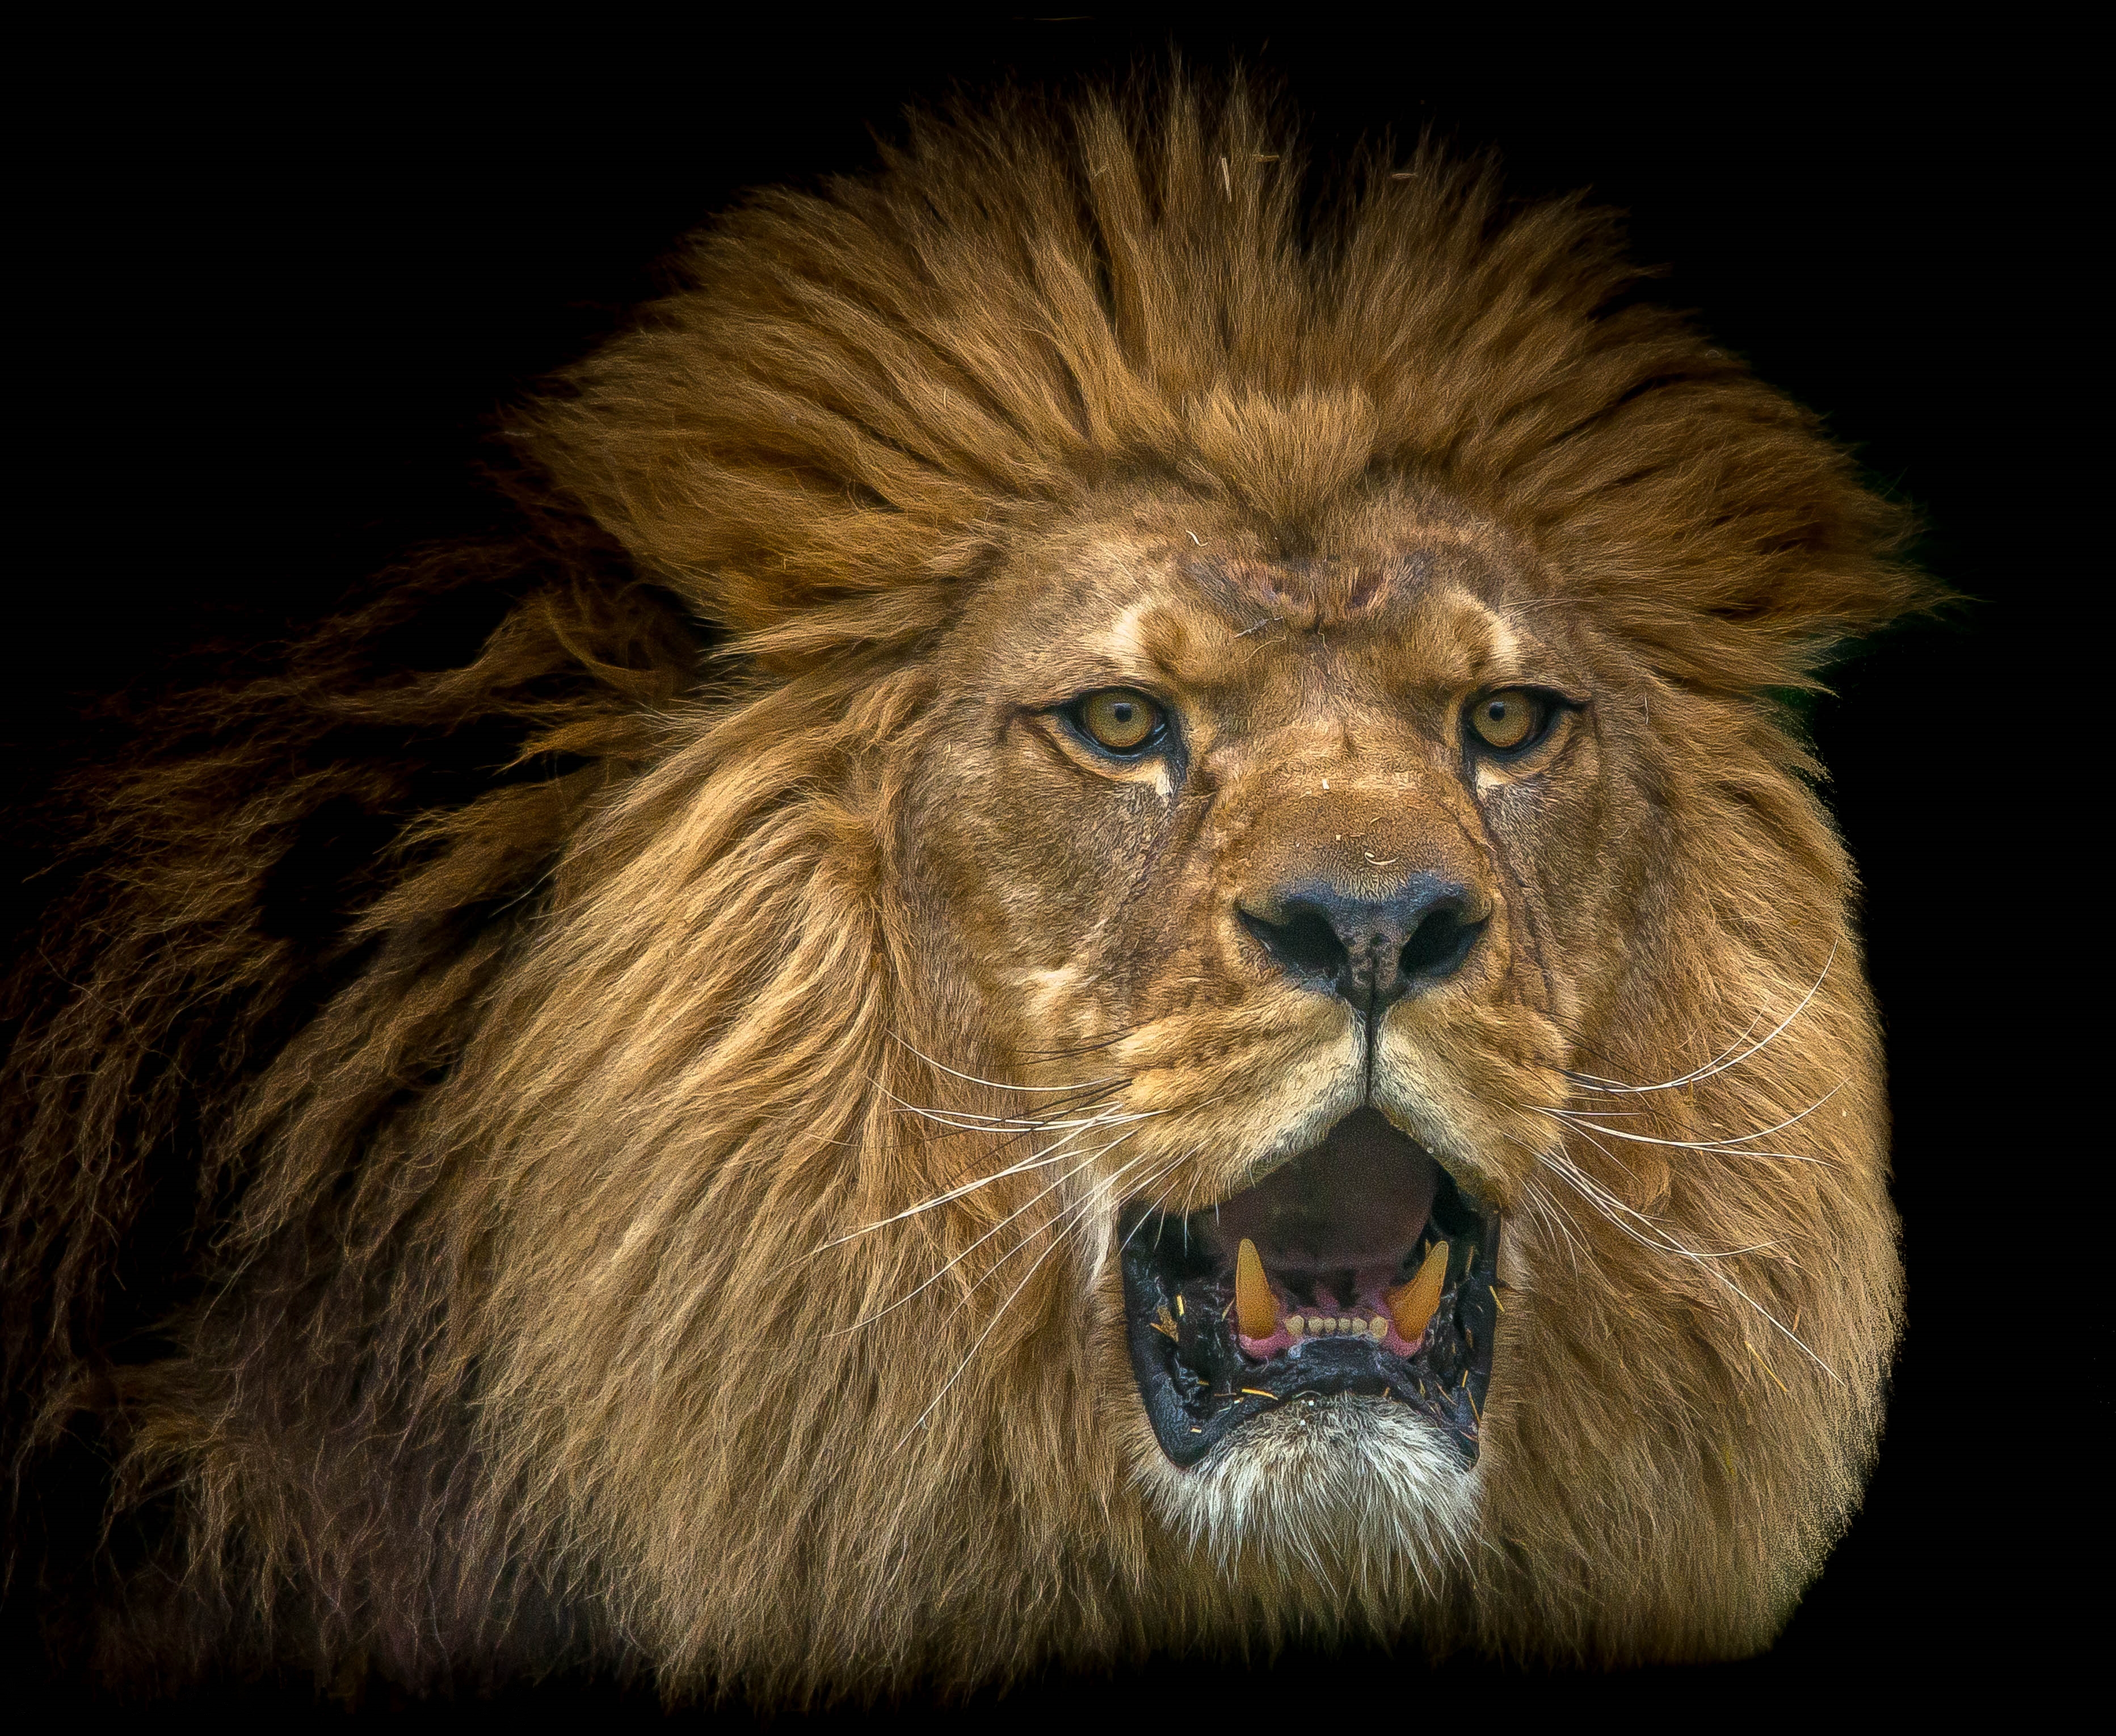 Wallpapers portrait lion king of beasts on the desktop